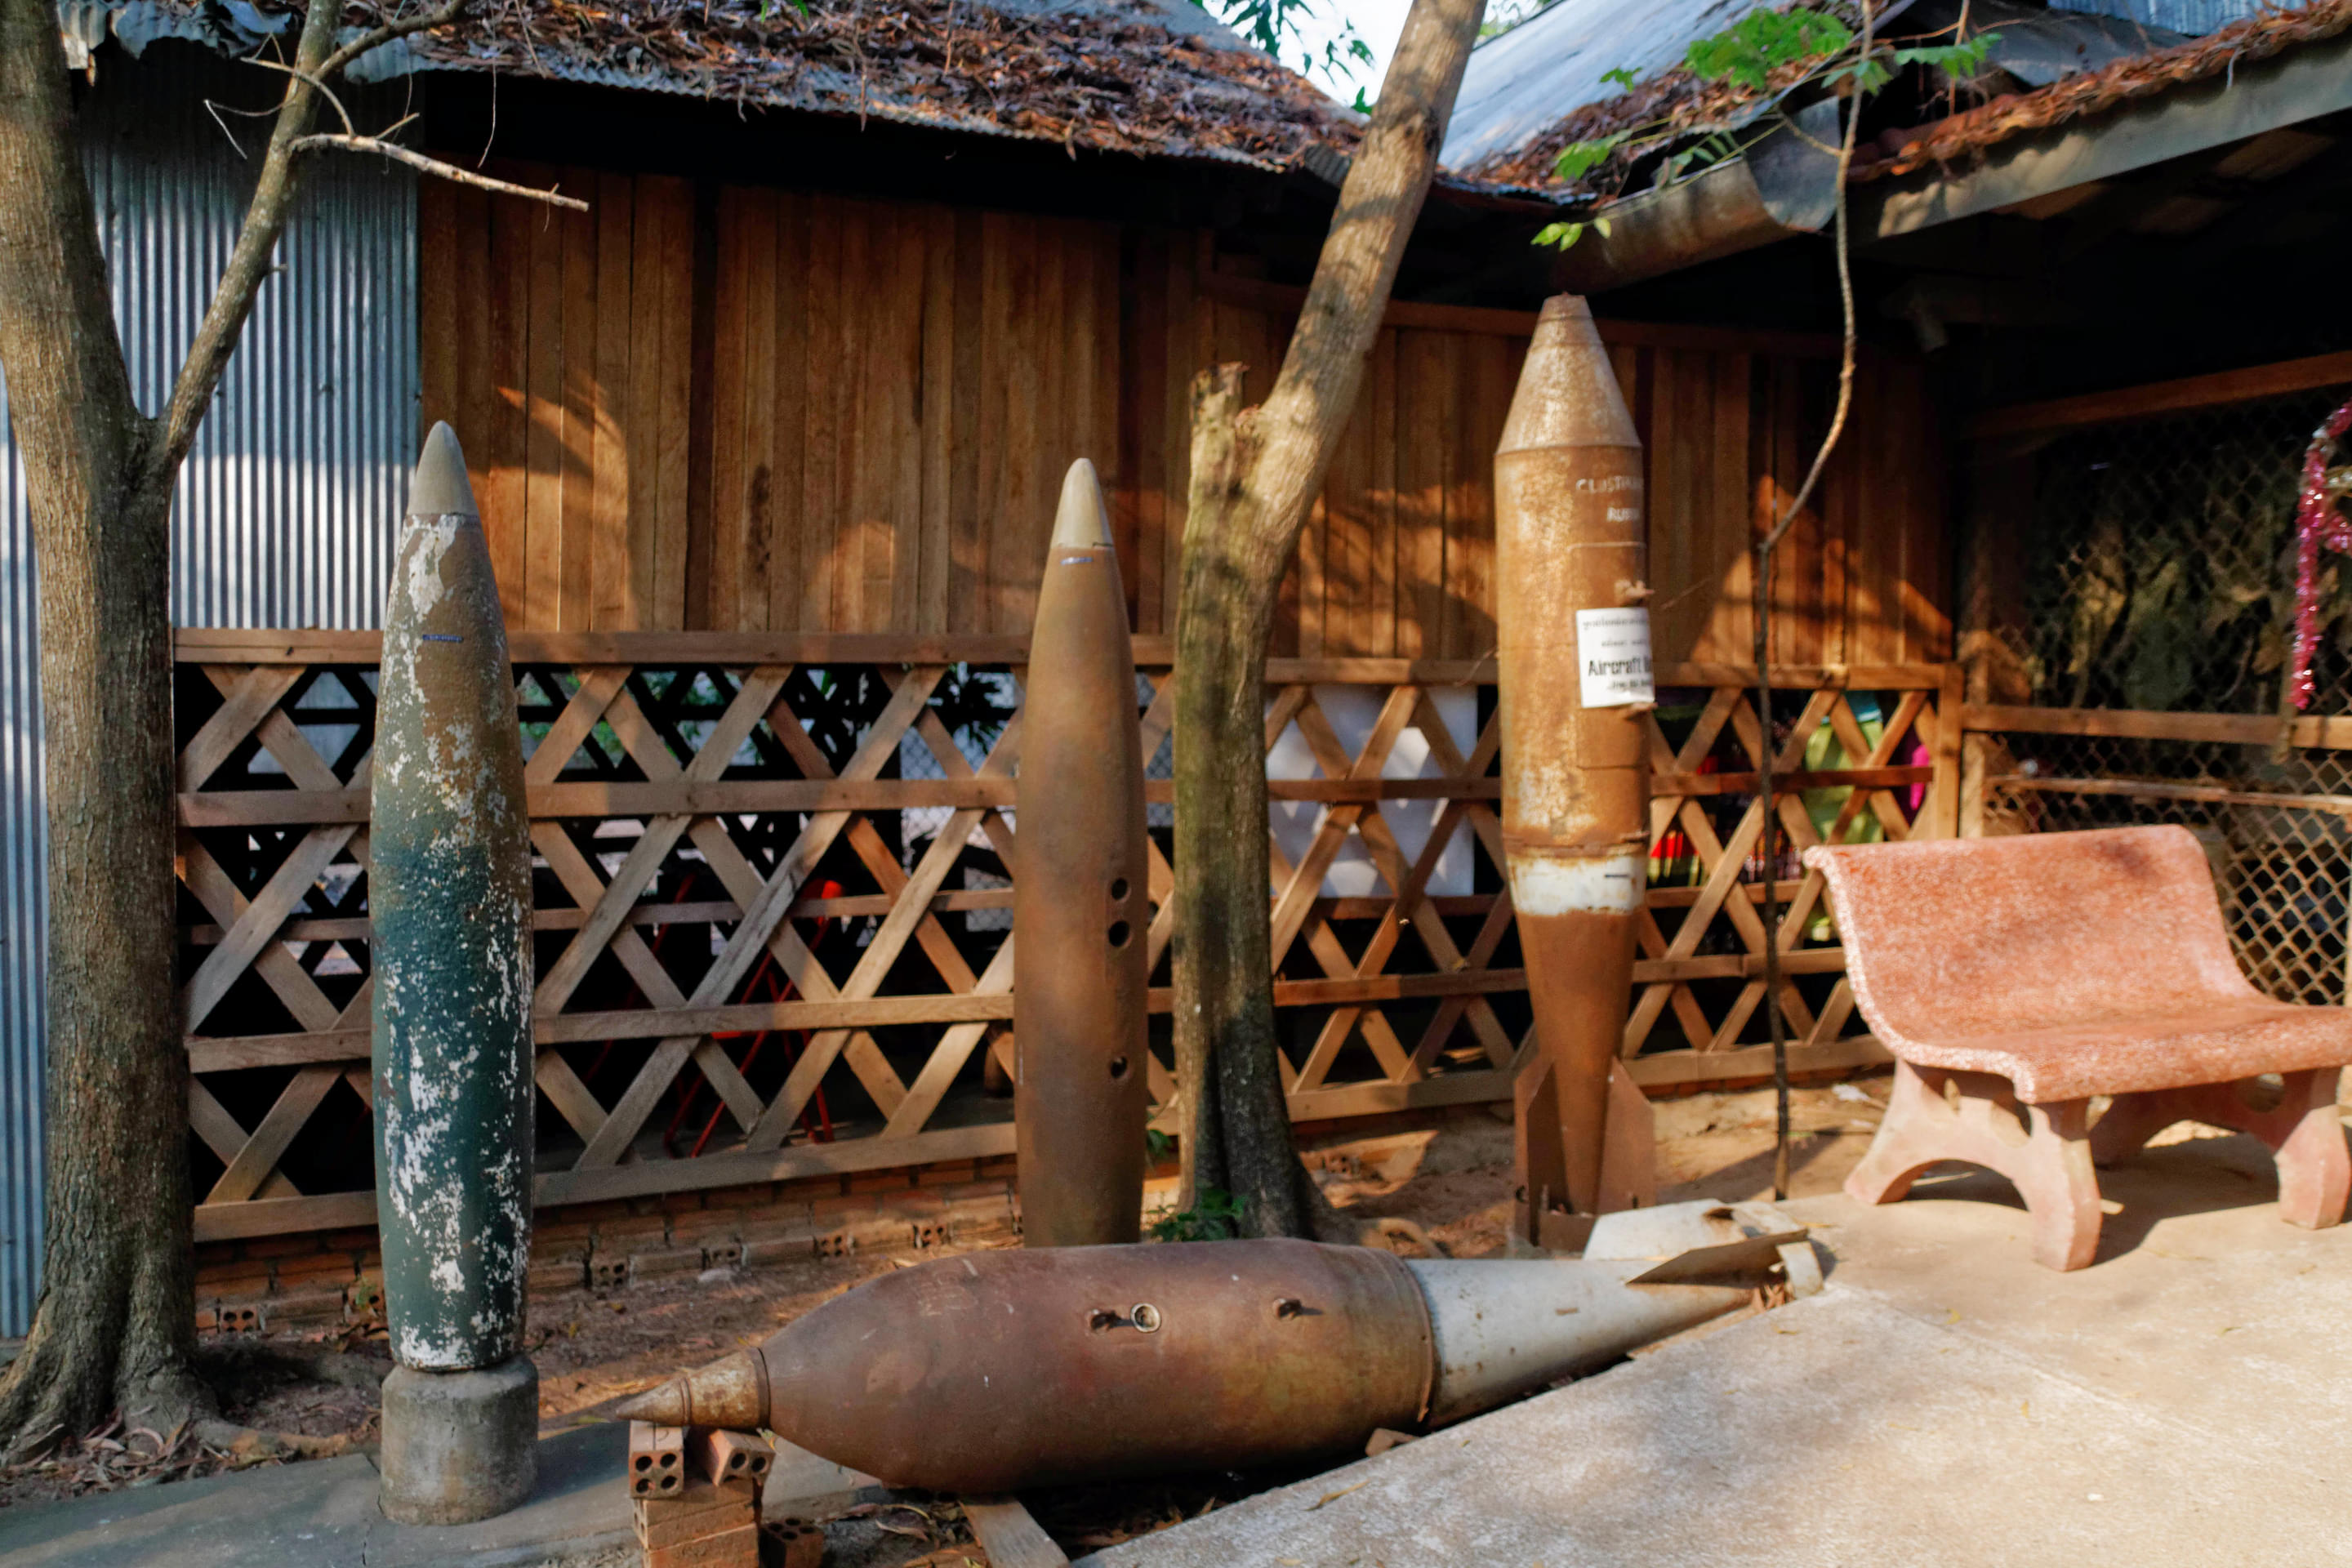 Cambodia Landmine Museum Overview